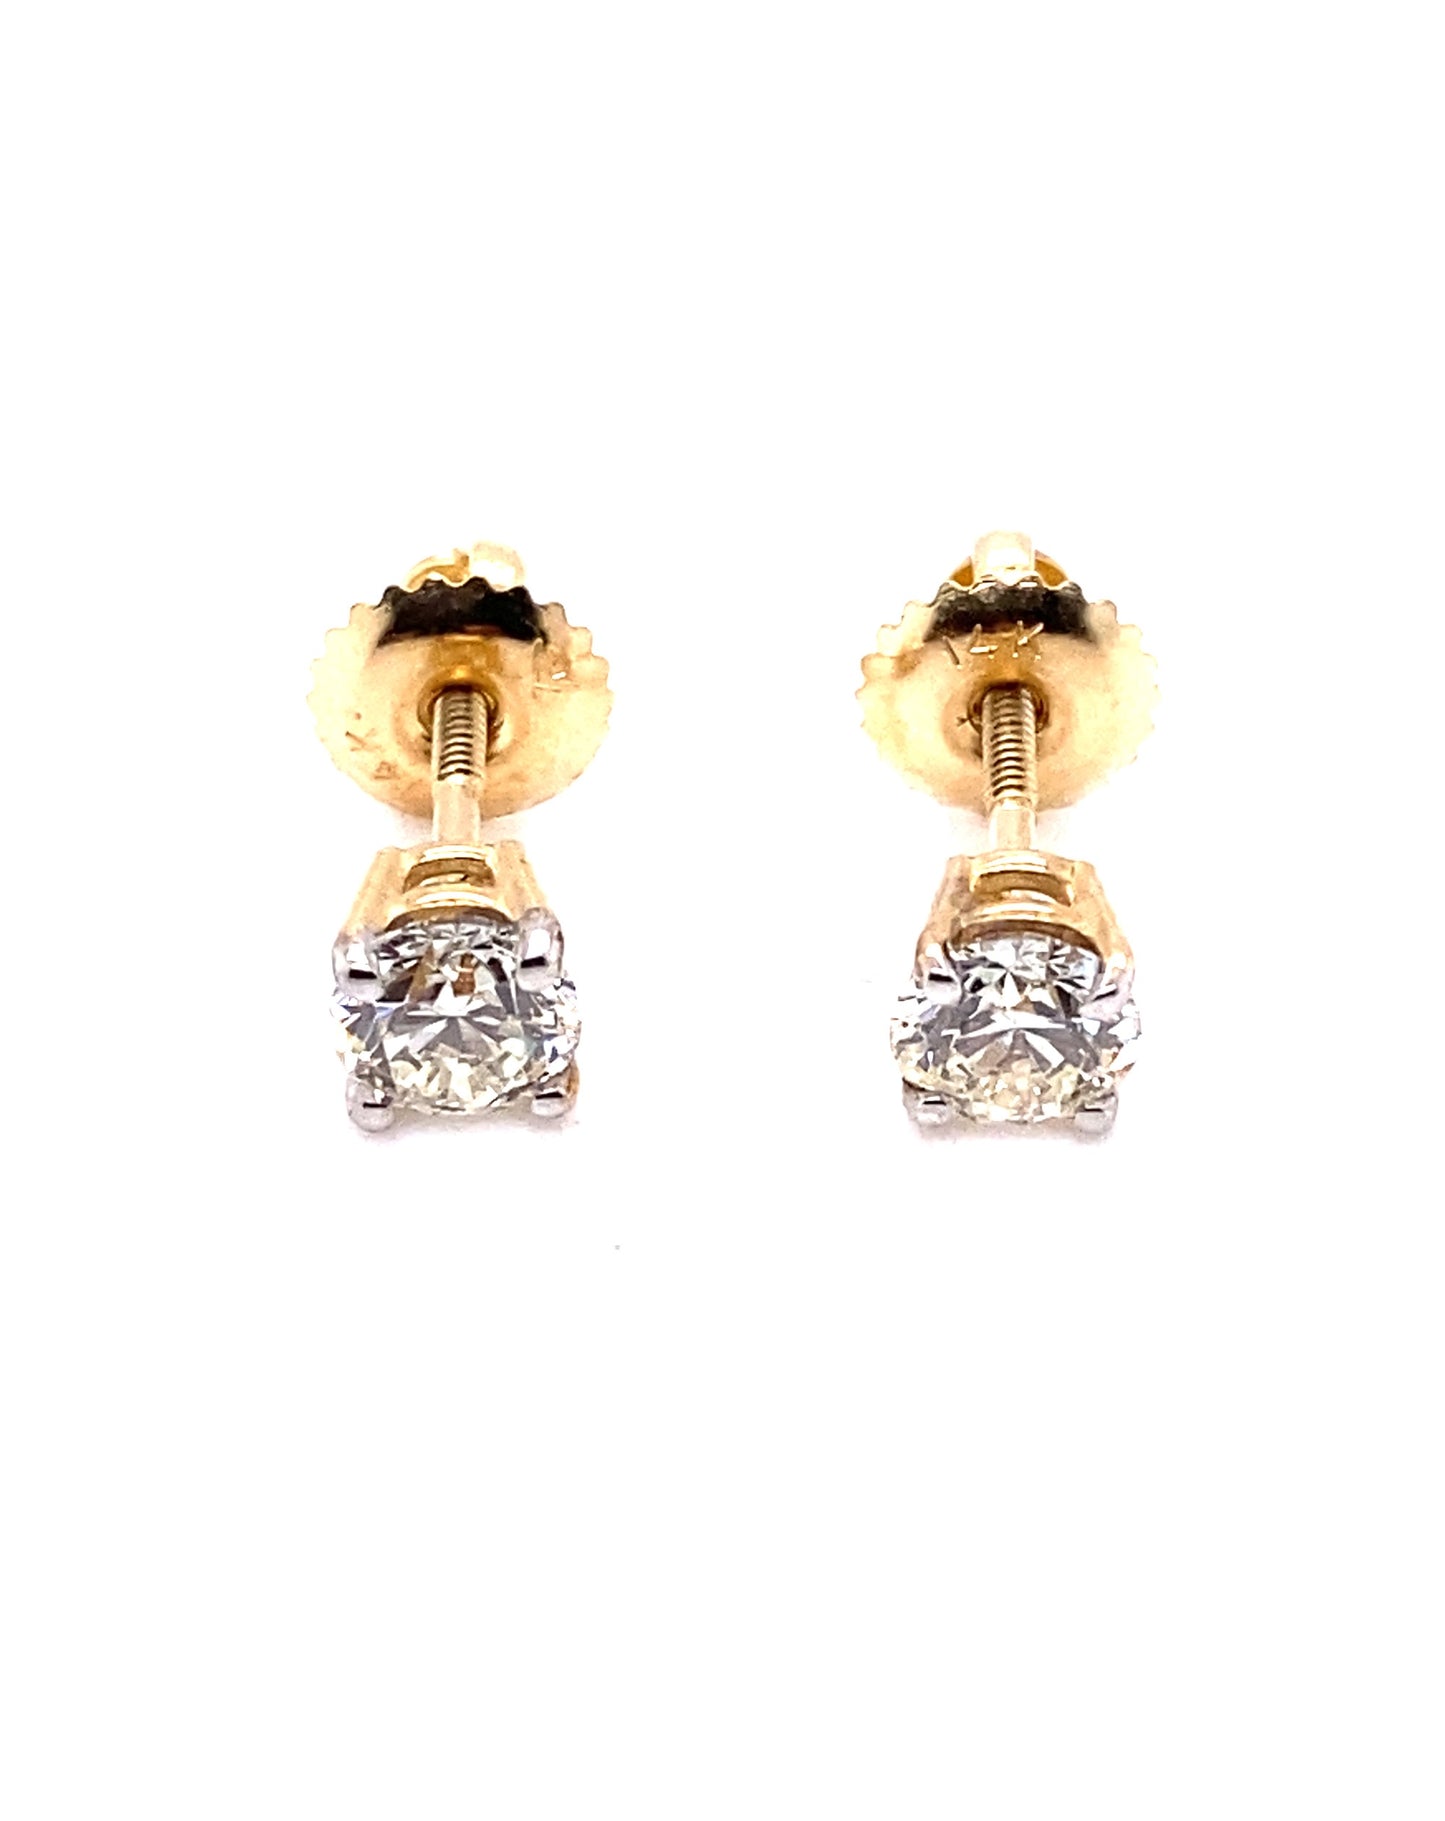 Diamonds Gold Earrings with Diamond Stud Setting, 0.75 CT Earrings